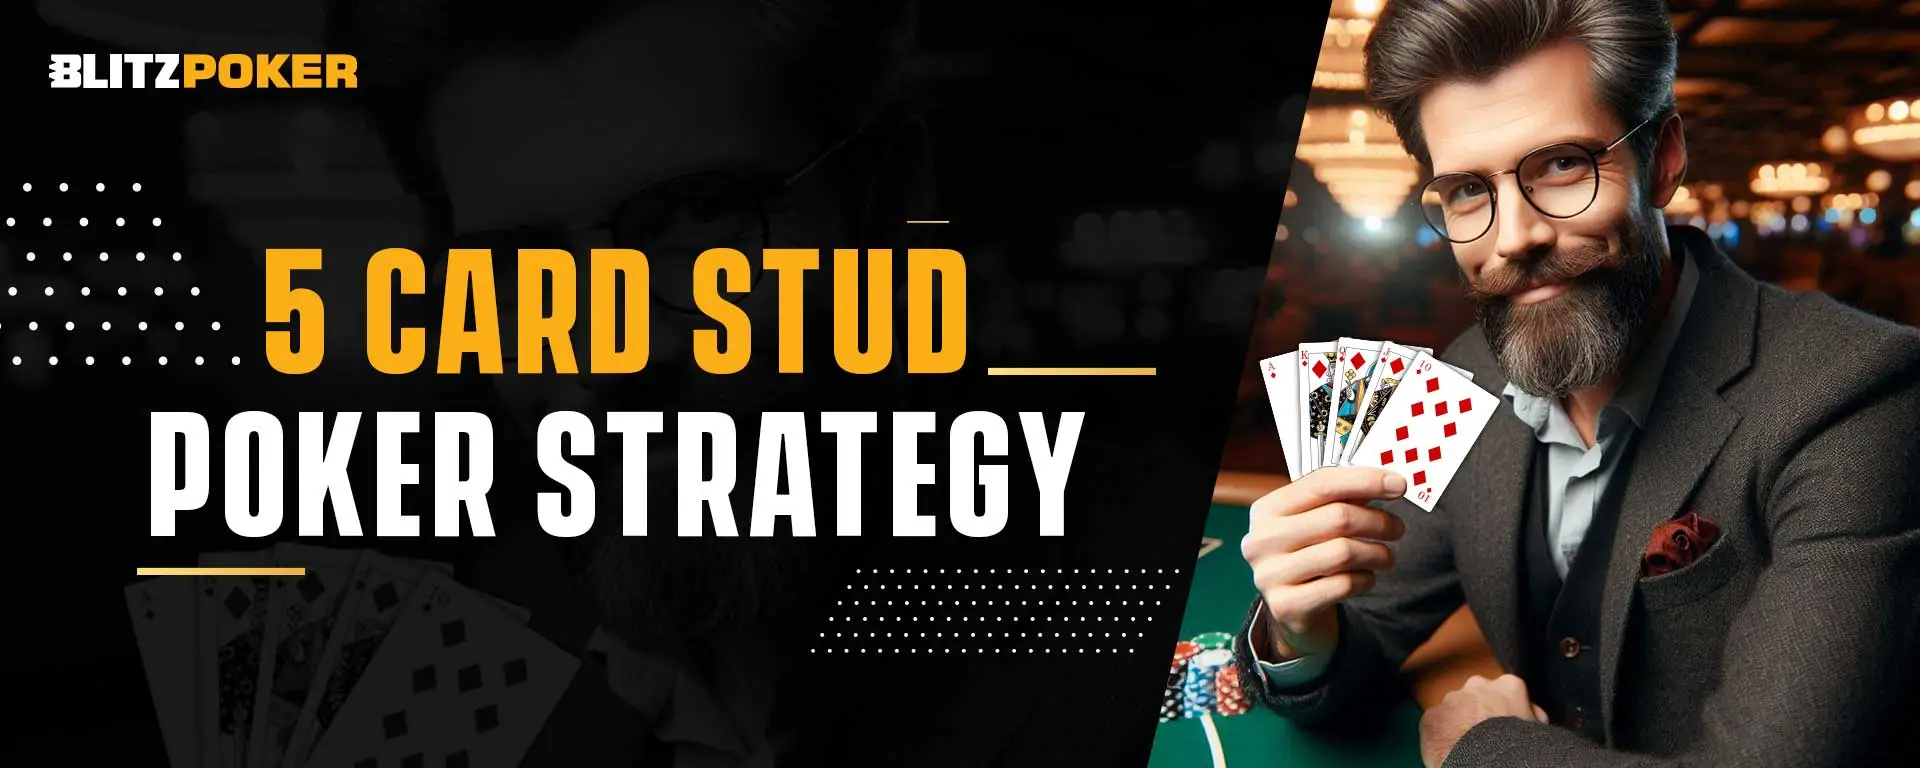 5 Card Stud Poker Strategy